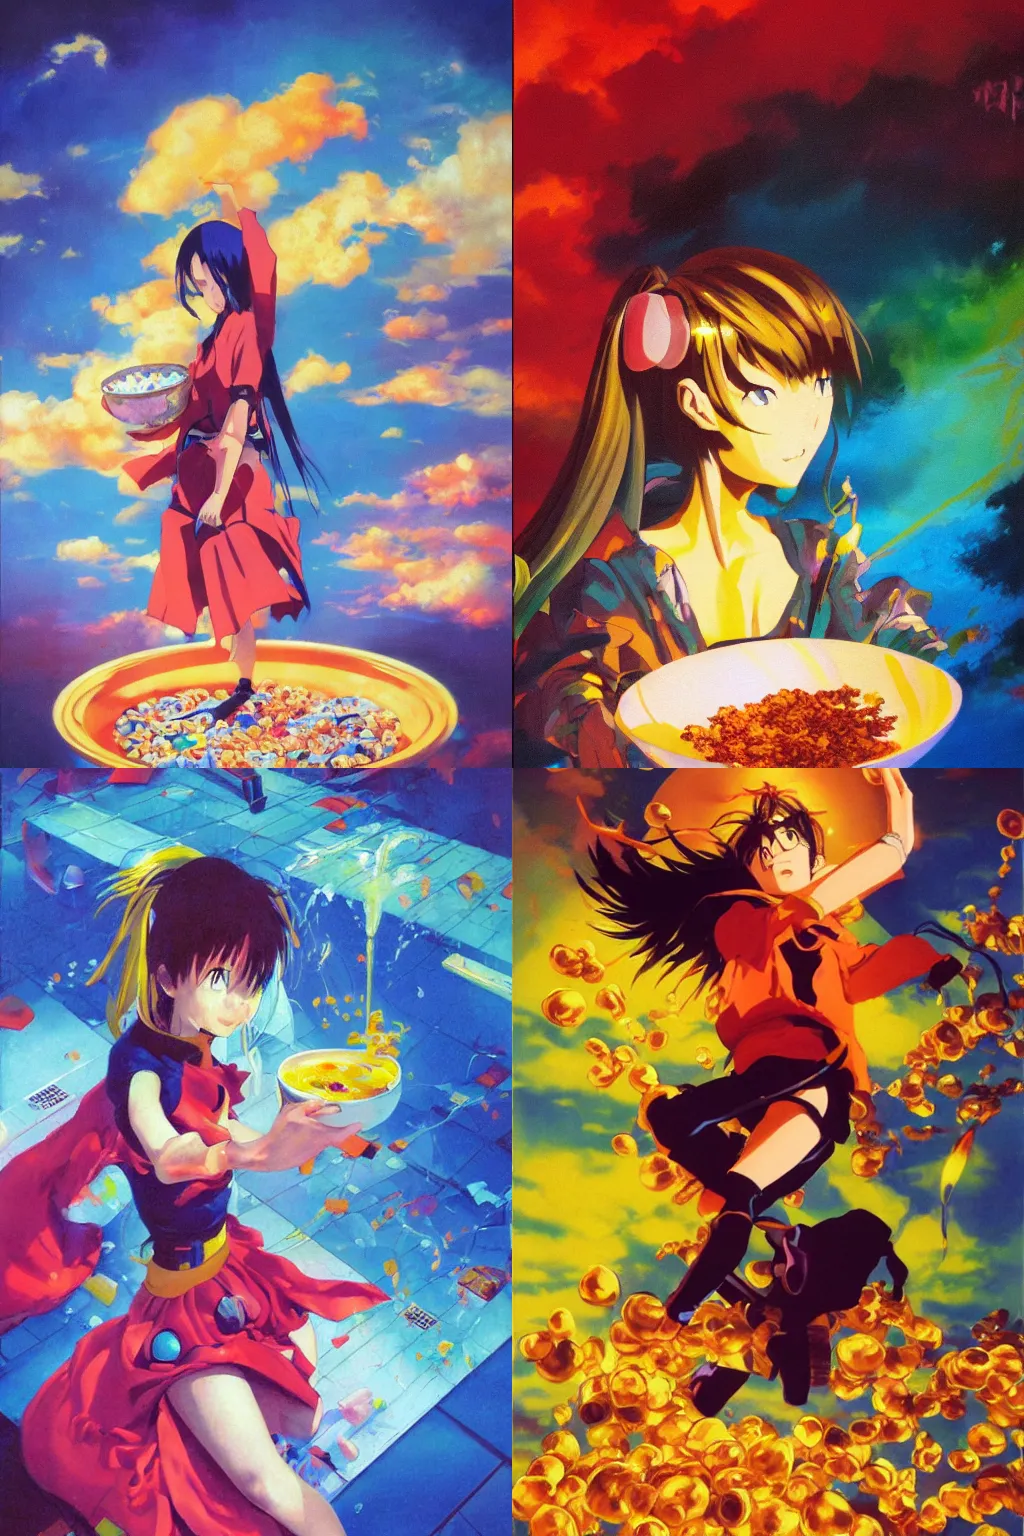 Prompt: oil painting, yoji shinakawa, studio gainax, y2k design, anime girl floating in cereal, dramatic lighting, vivid colors, vivid imagery